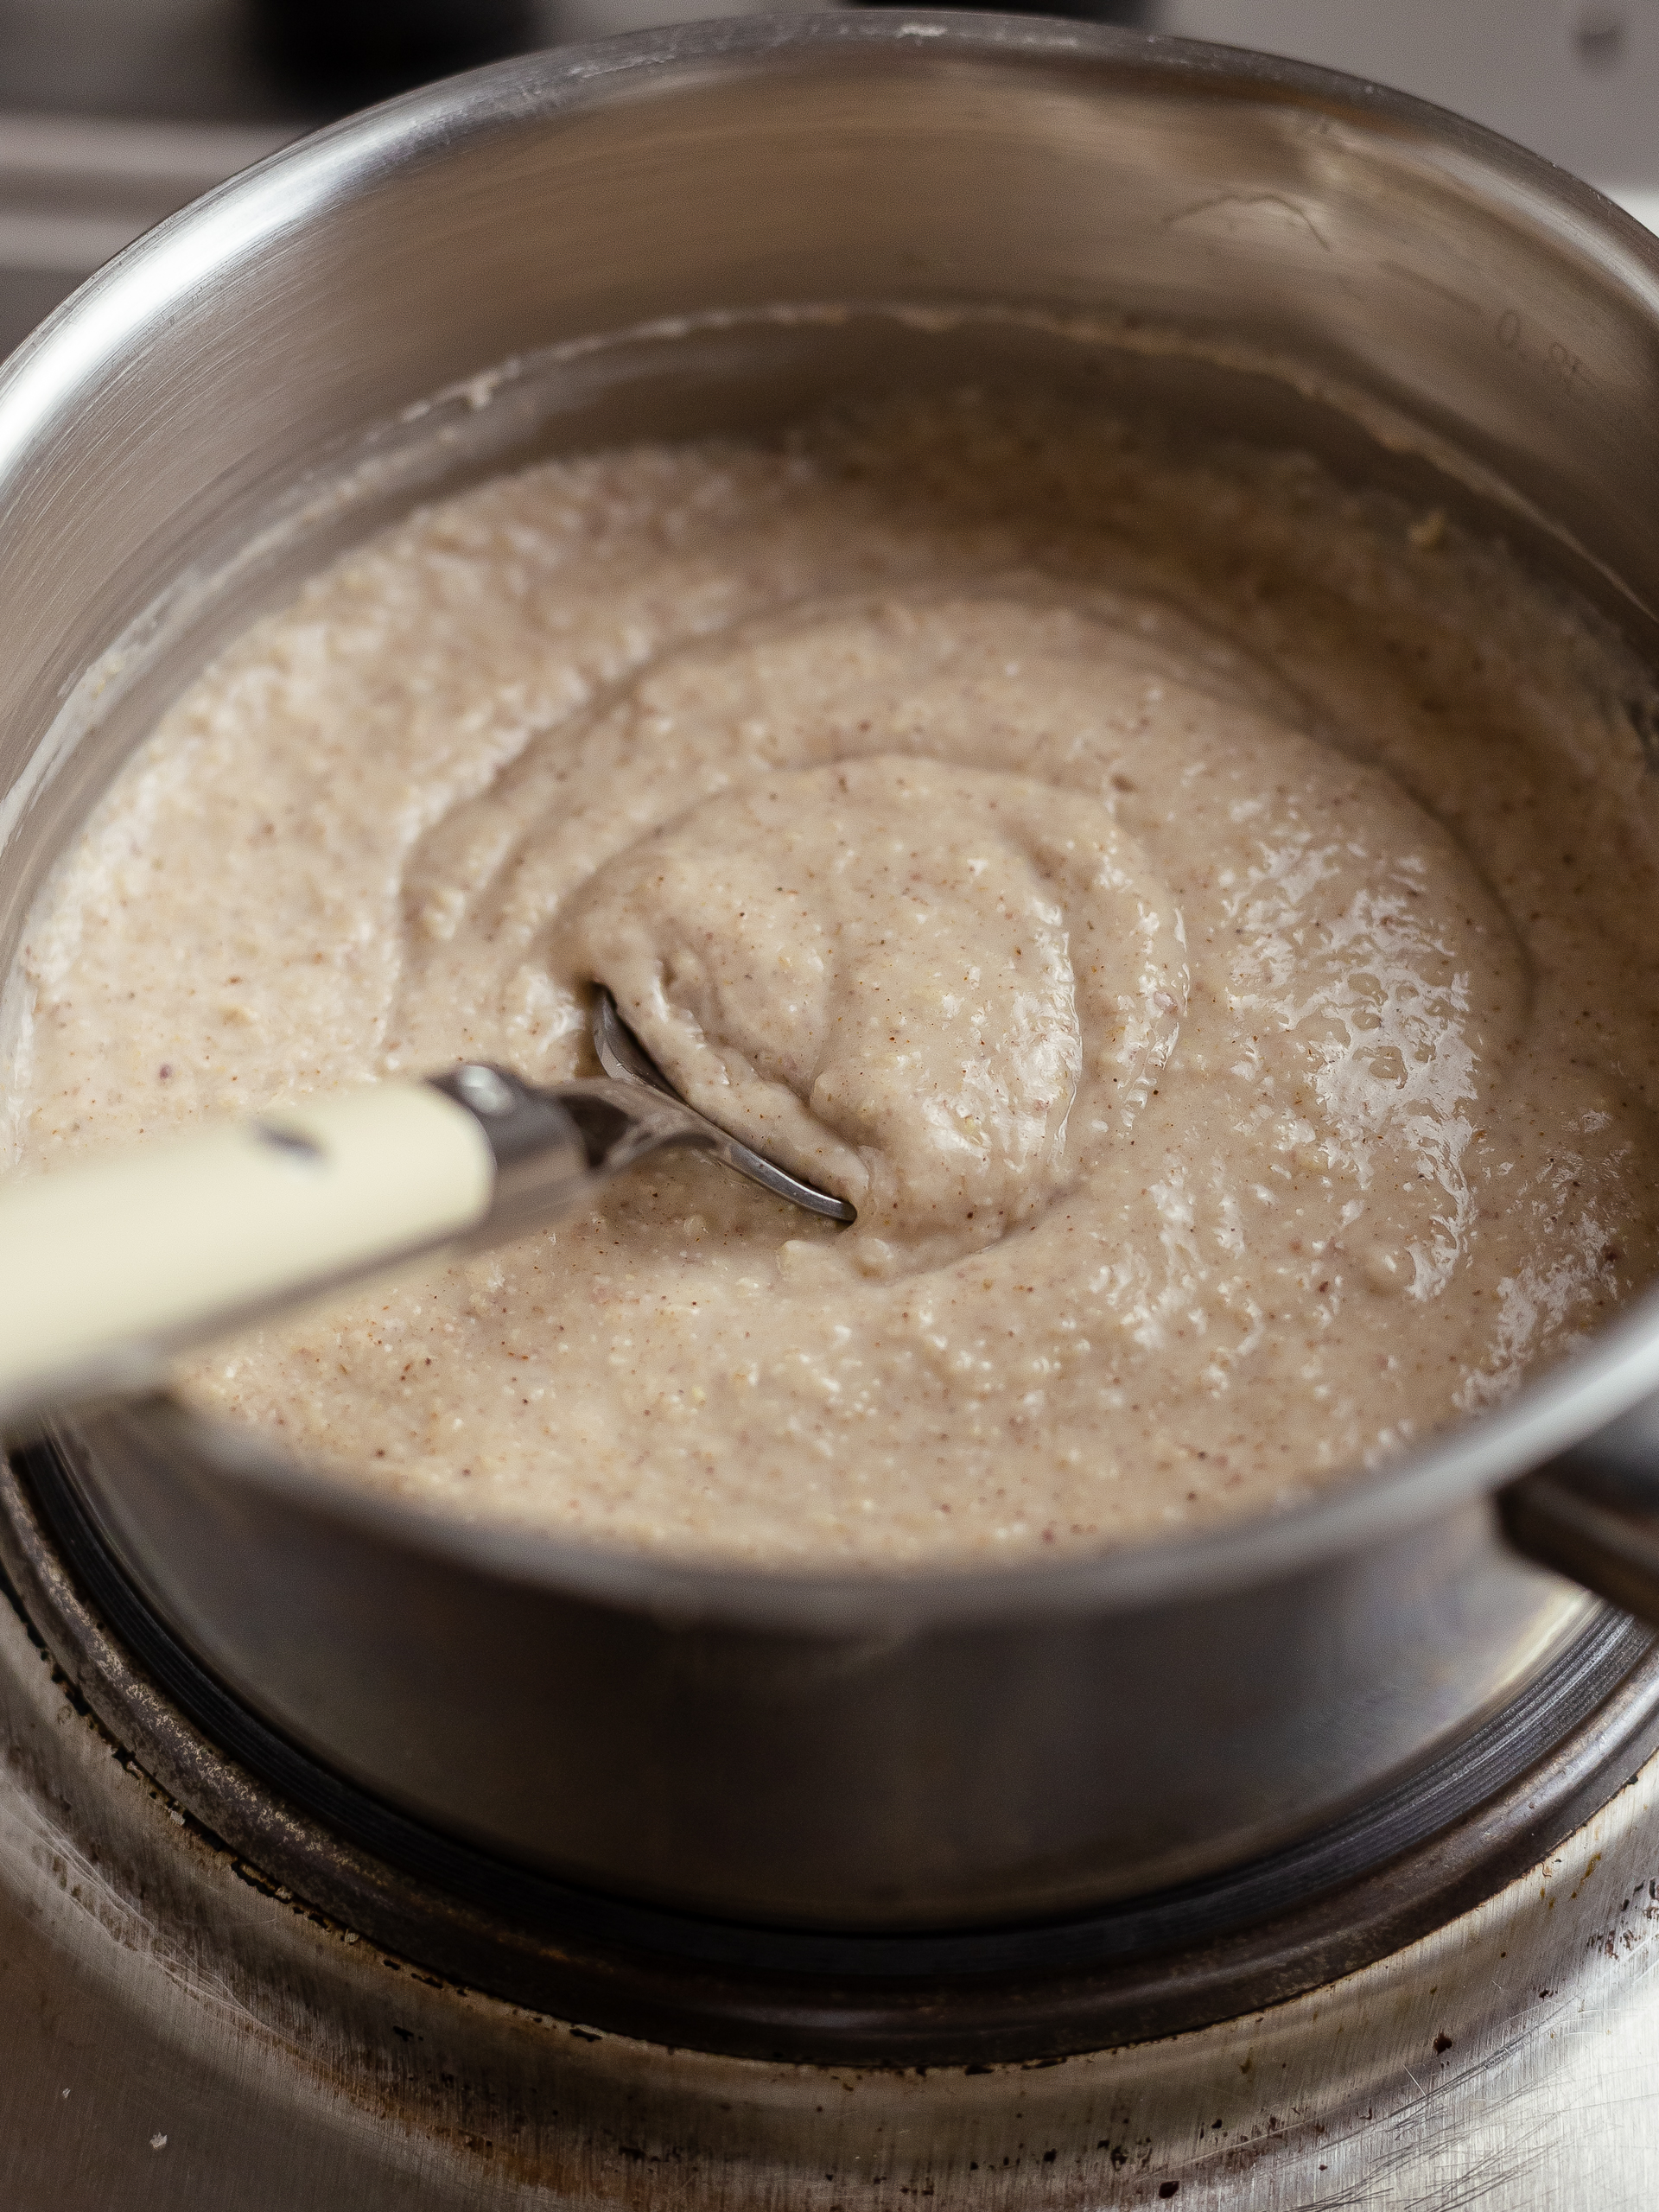 jamaican oat peanut porridge cooking in a pot